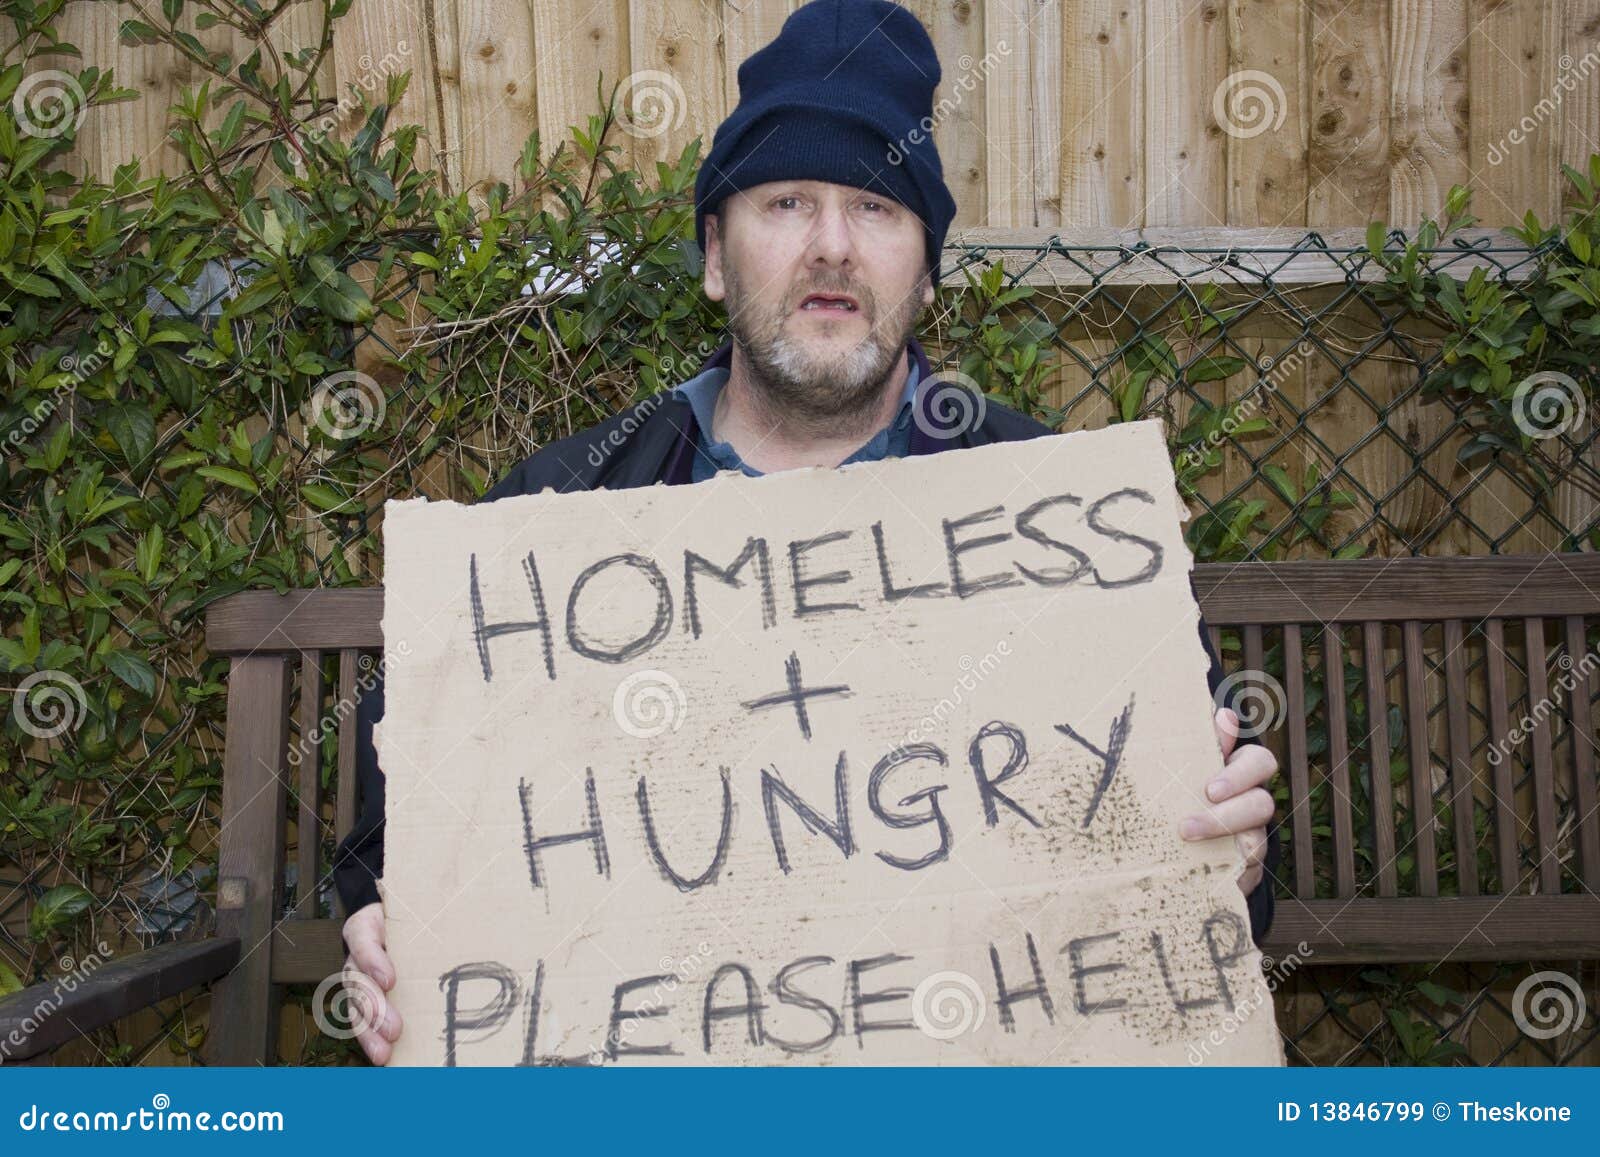 homeless-hungry-man-13846799.jpg